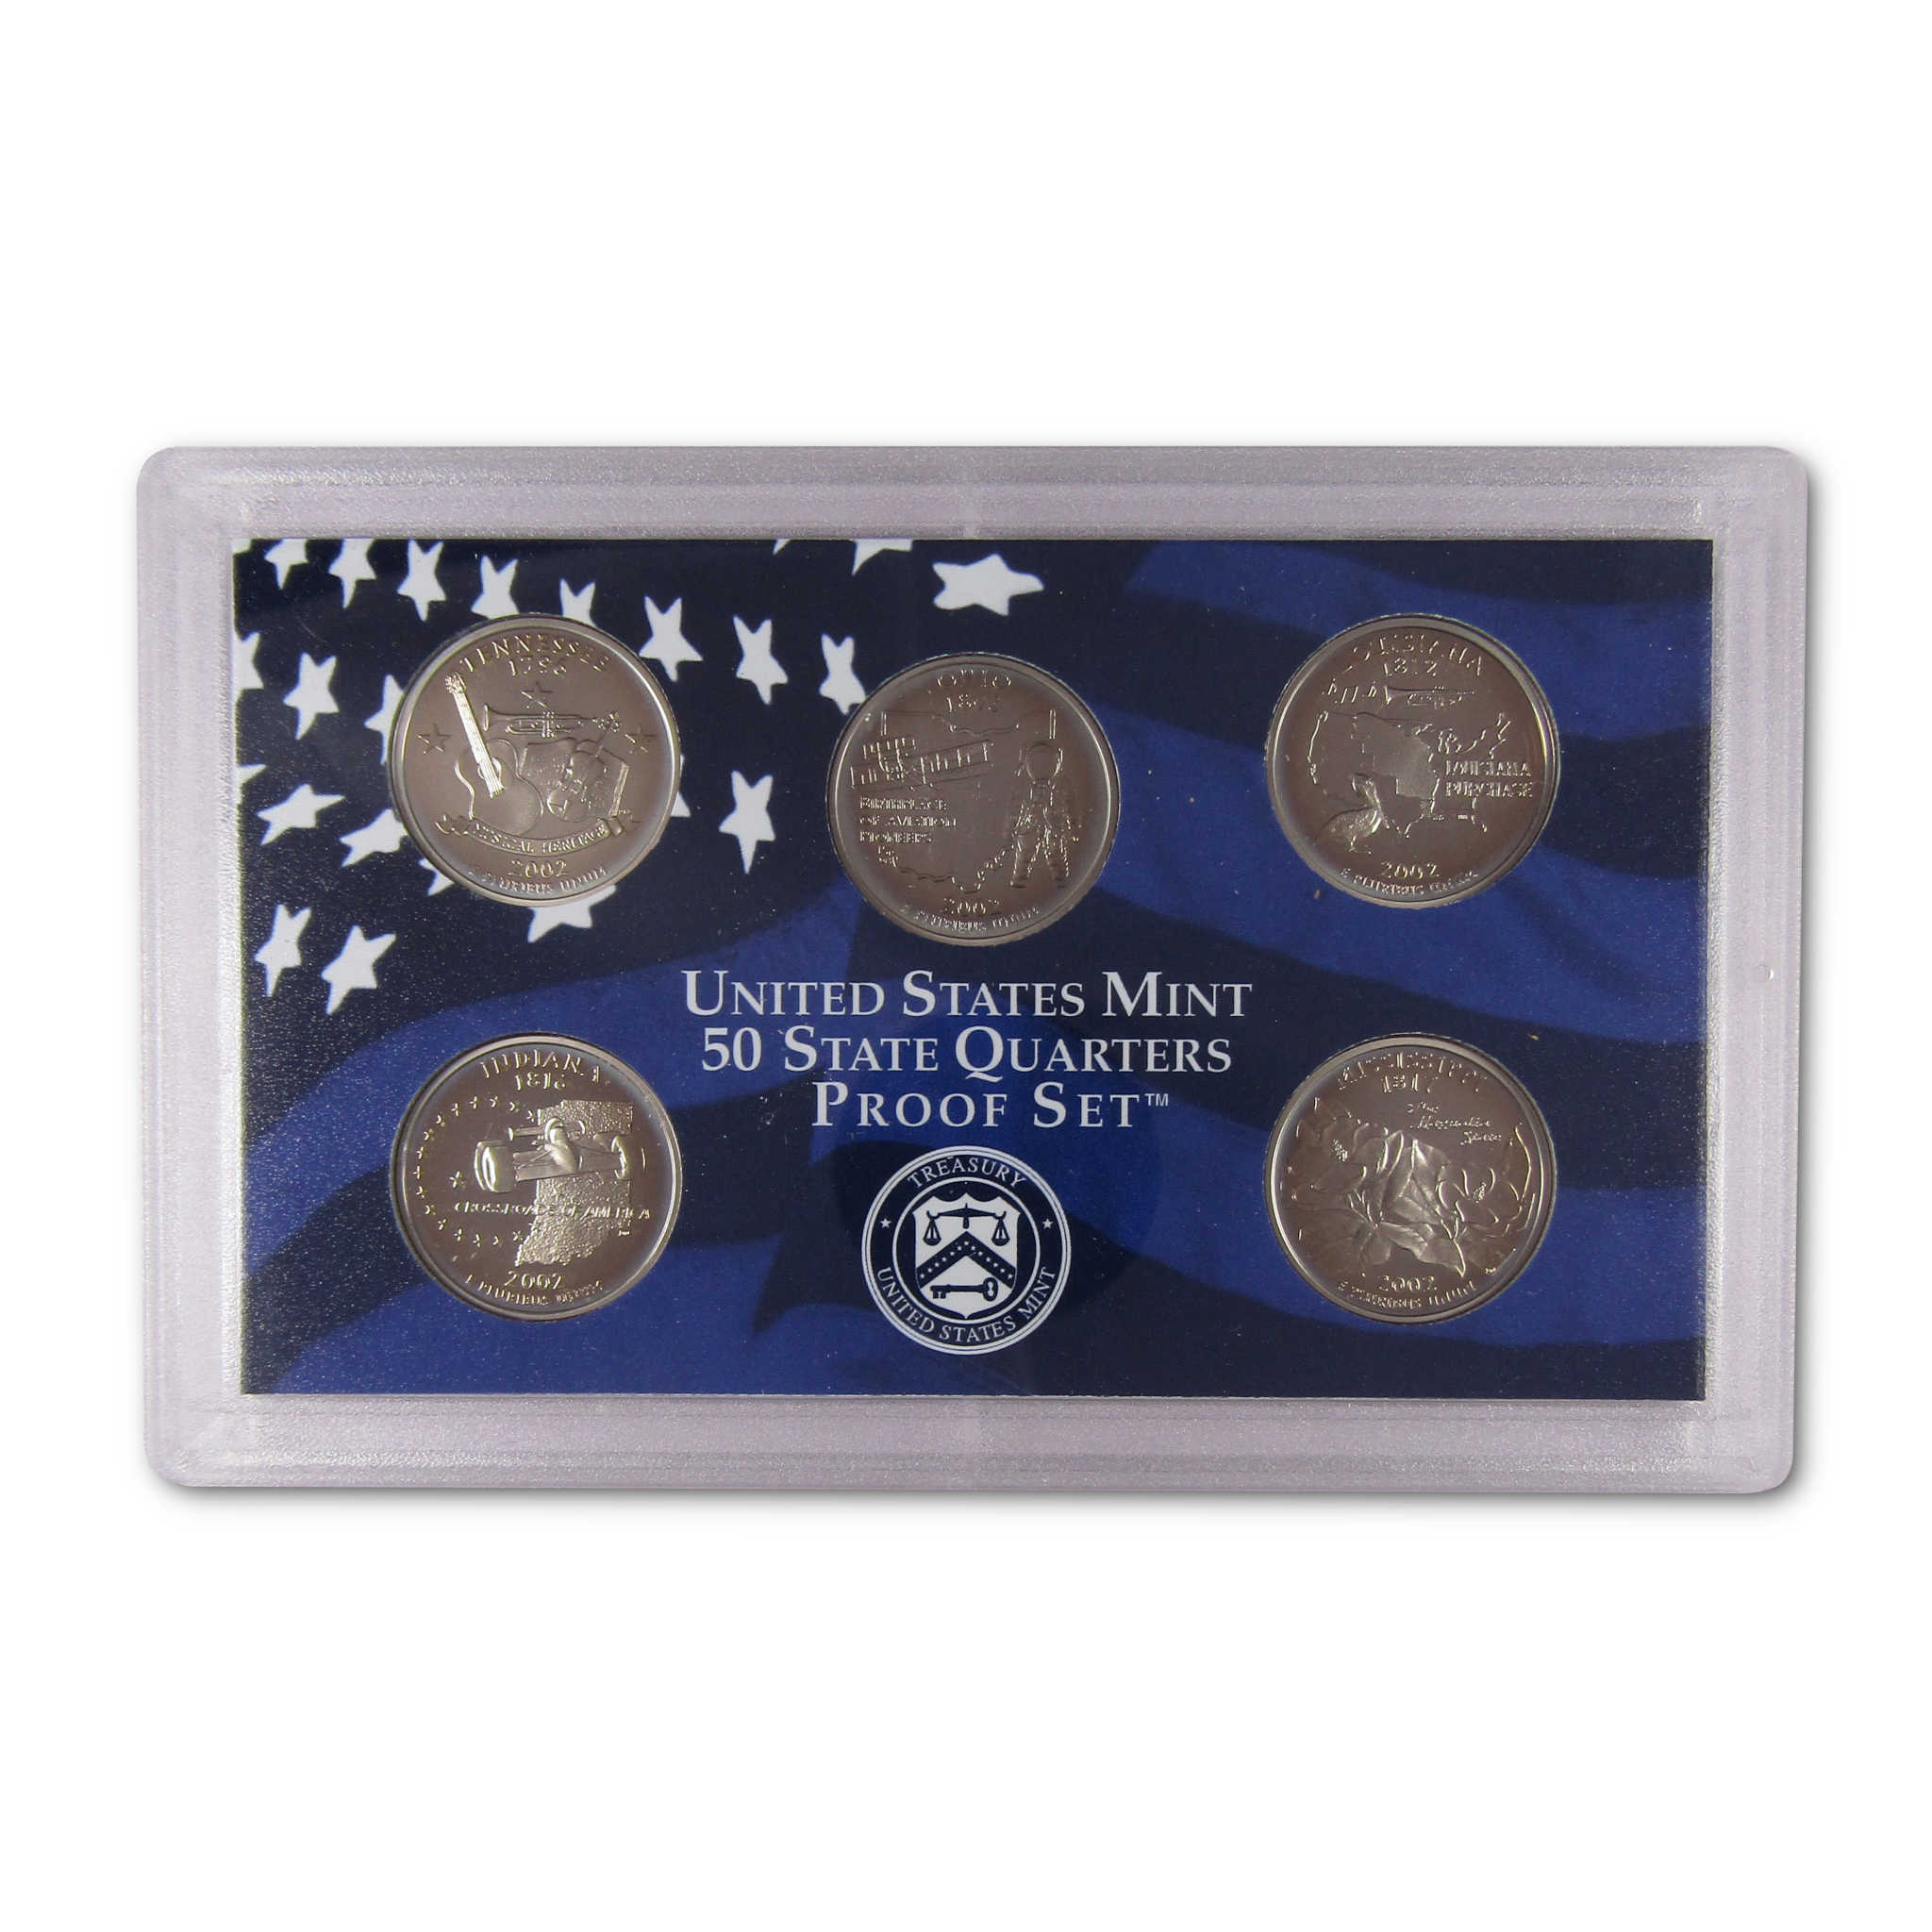 2002 State Quarter Clad Proof Set U.S. Mint Packaging OGP COA